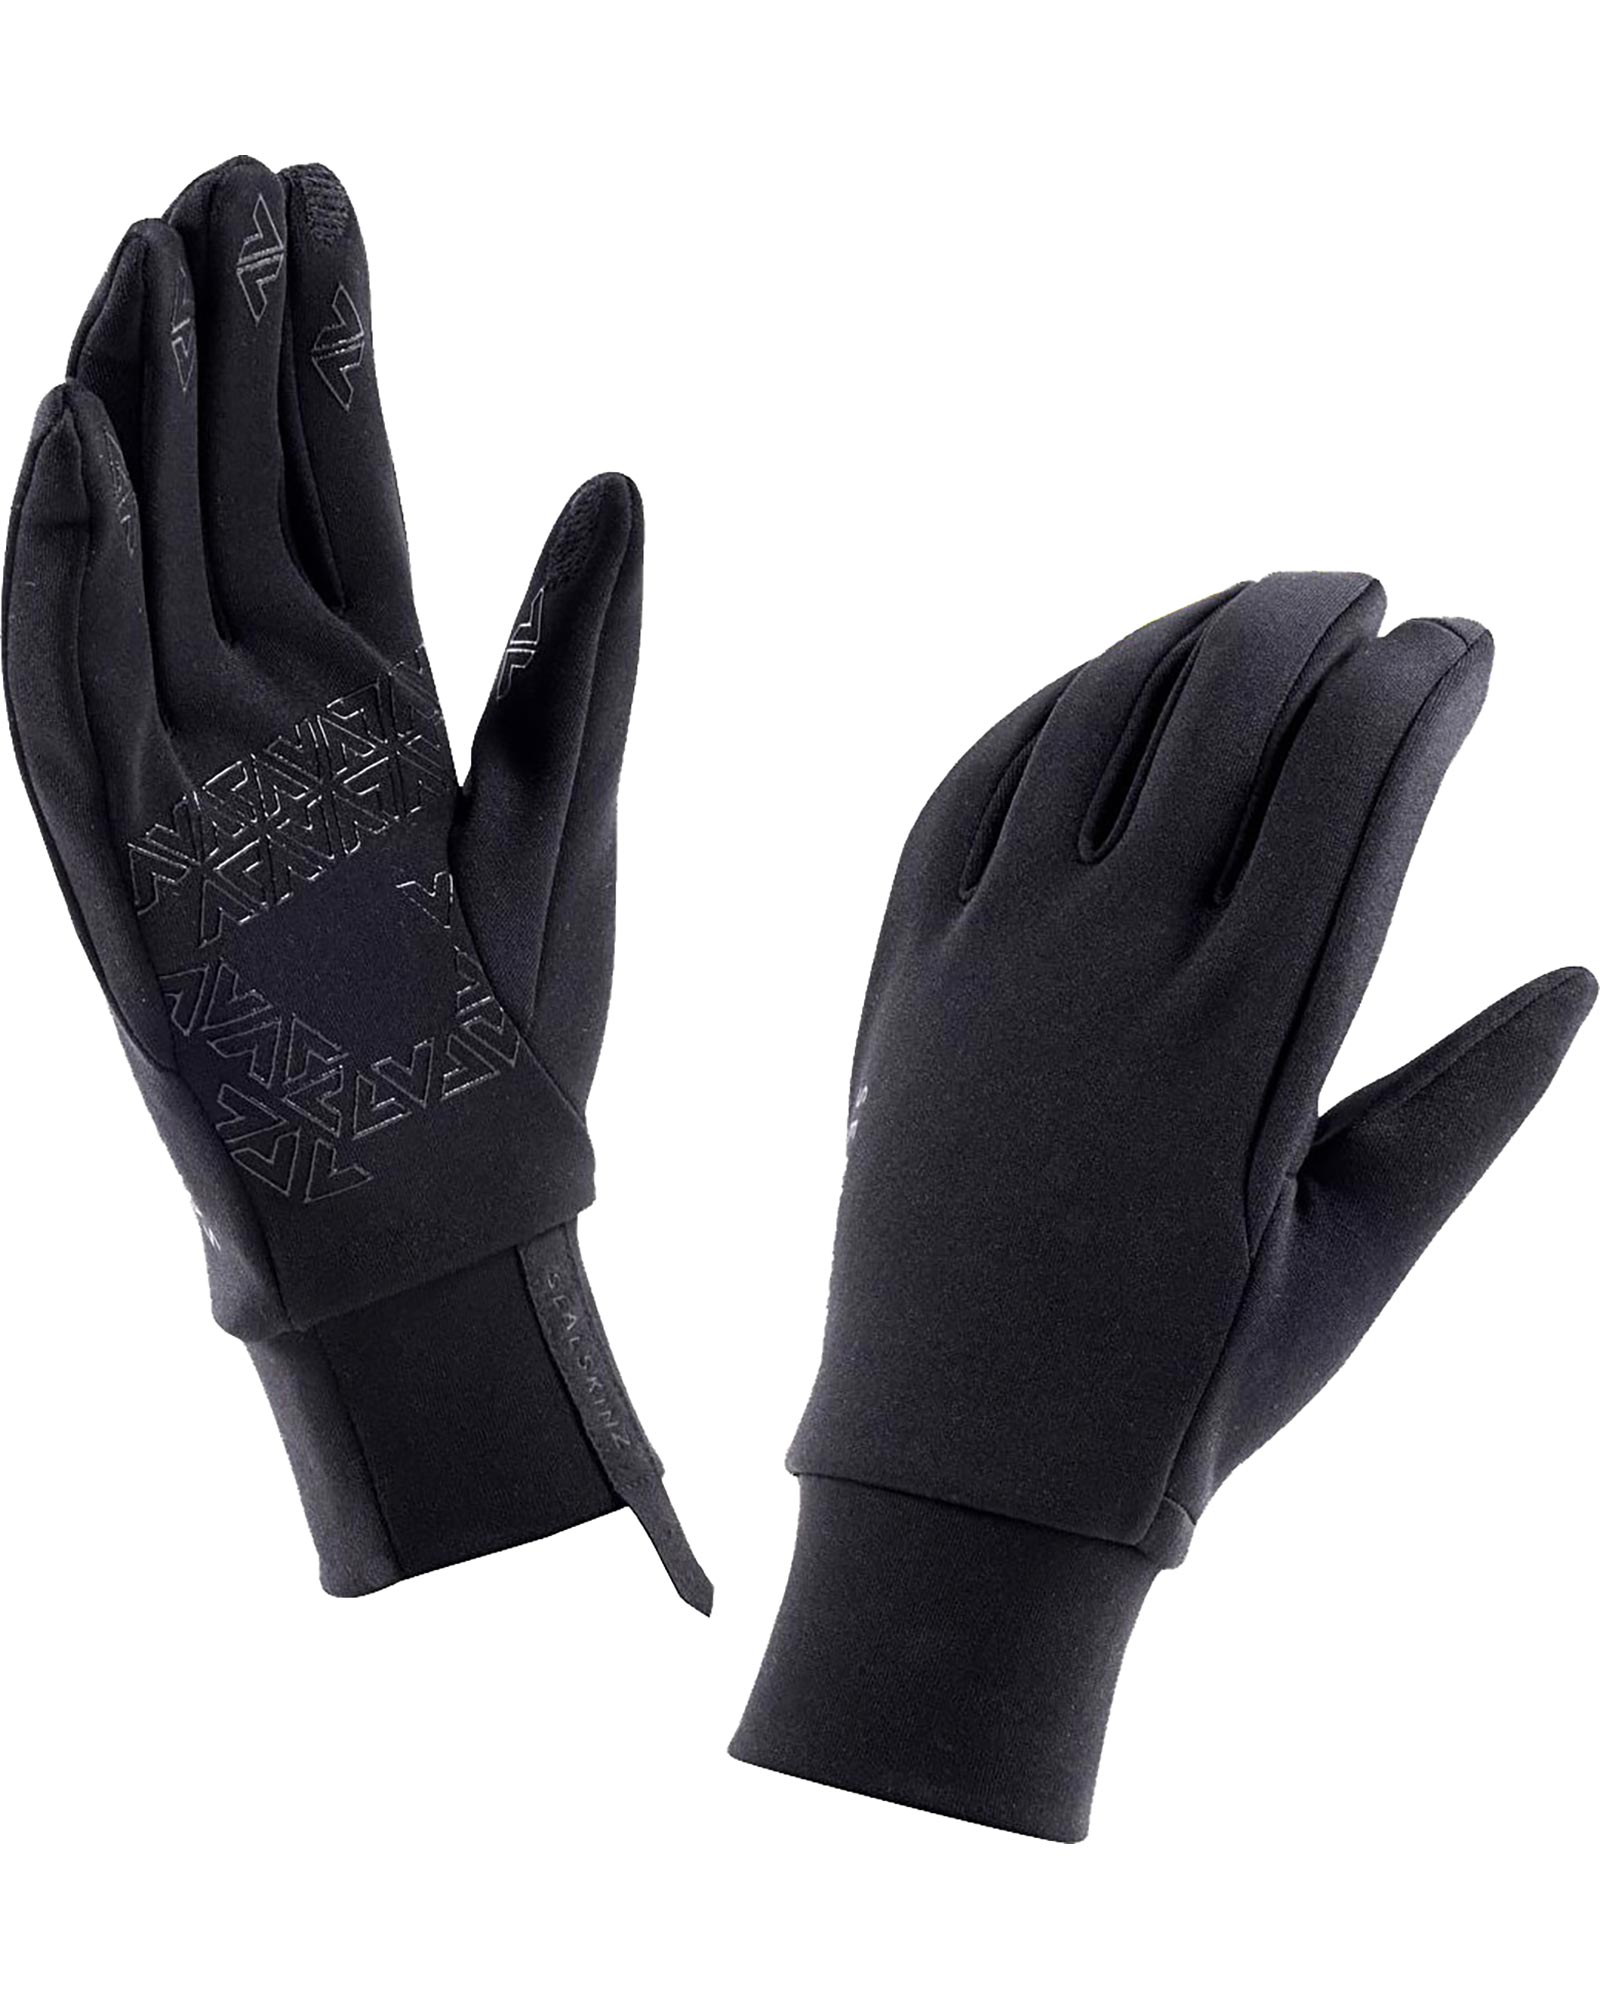 SealSkinz Stretch Nano Women’s Gloves - black XL